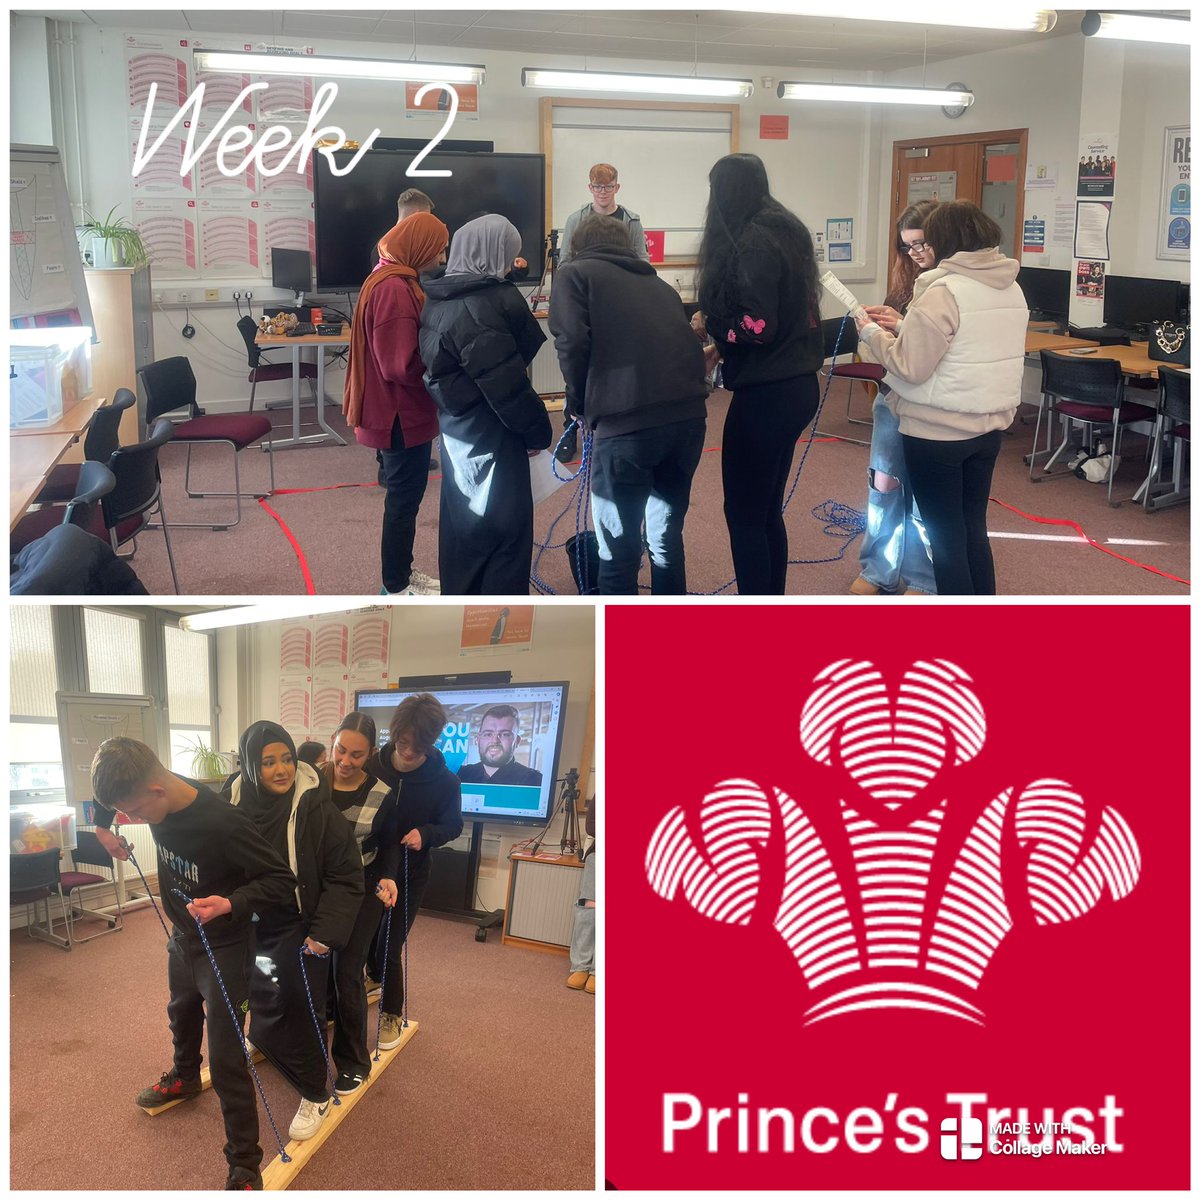 Glasgow Clyde College Prince's Trust Team 69 Week 2 #teamwork Digital skills #digitalskills continue to attend Barista class #Youth #gccsa